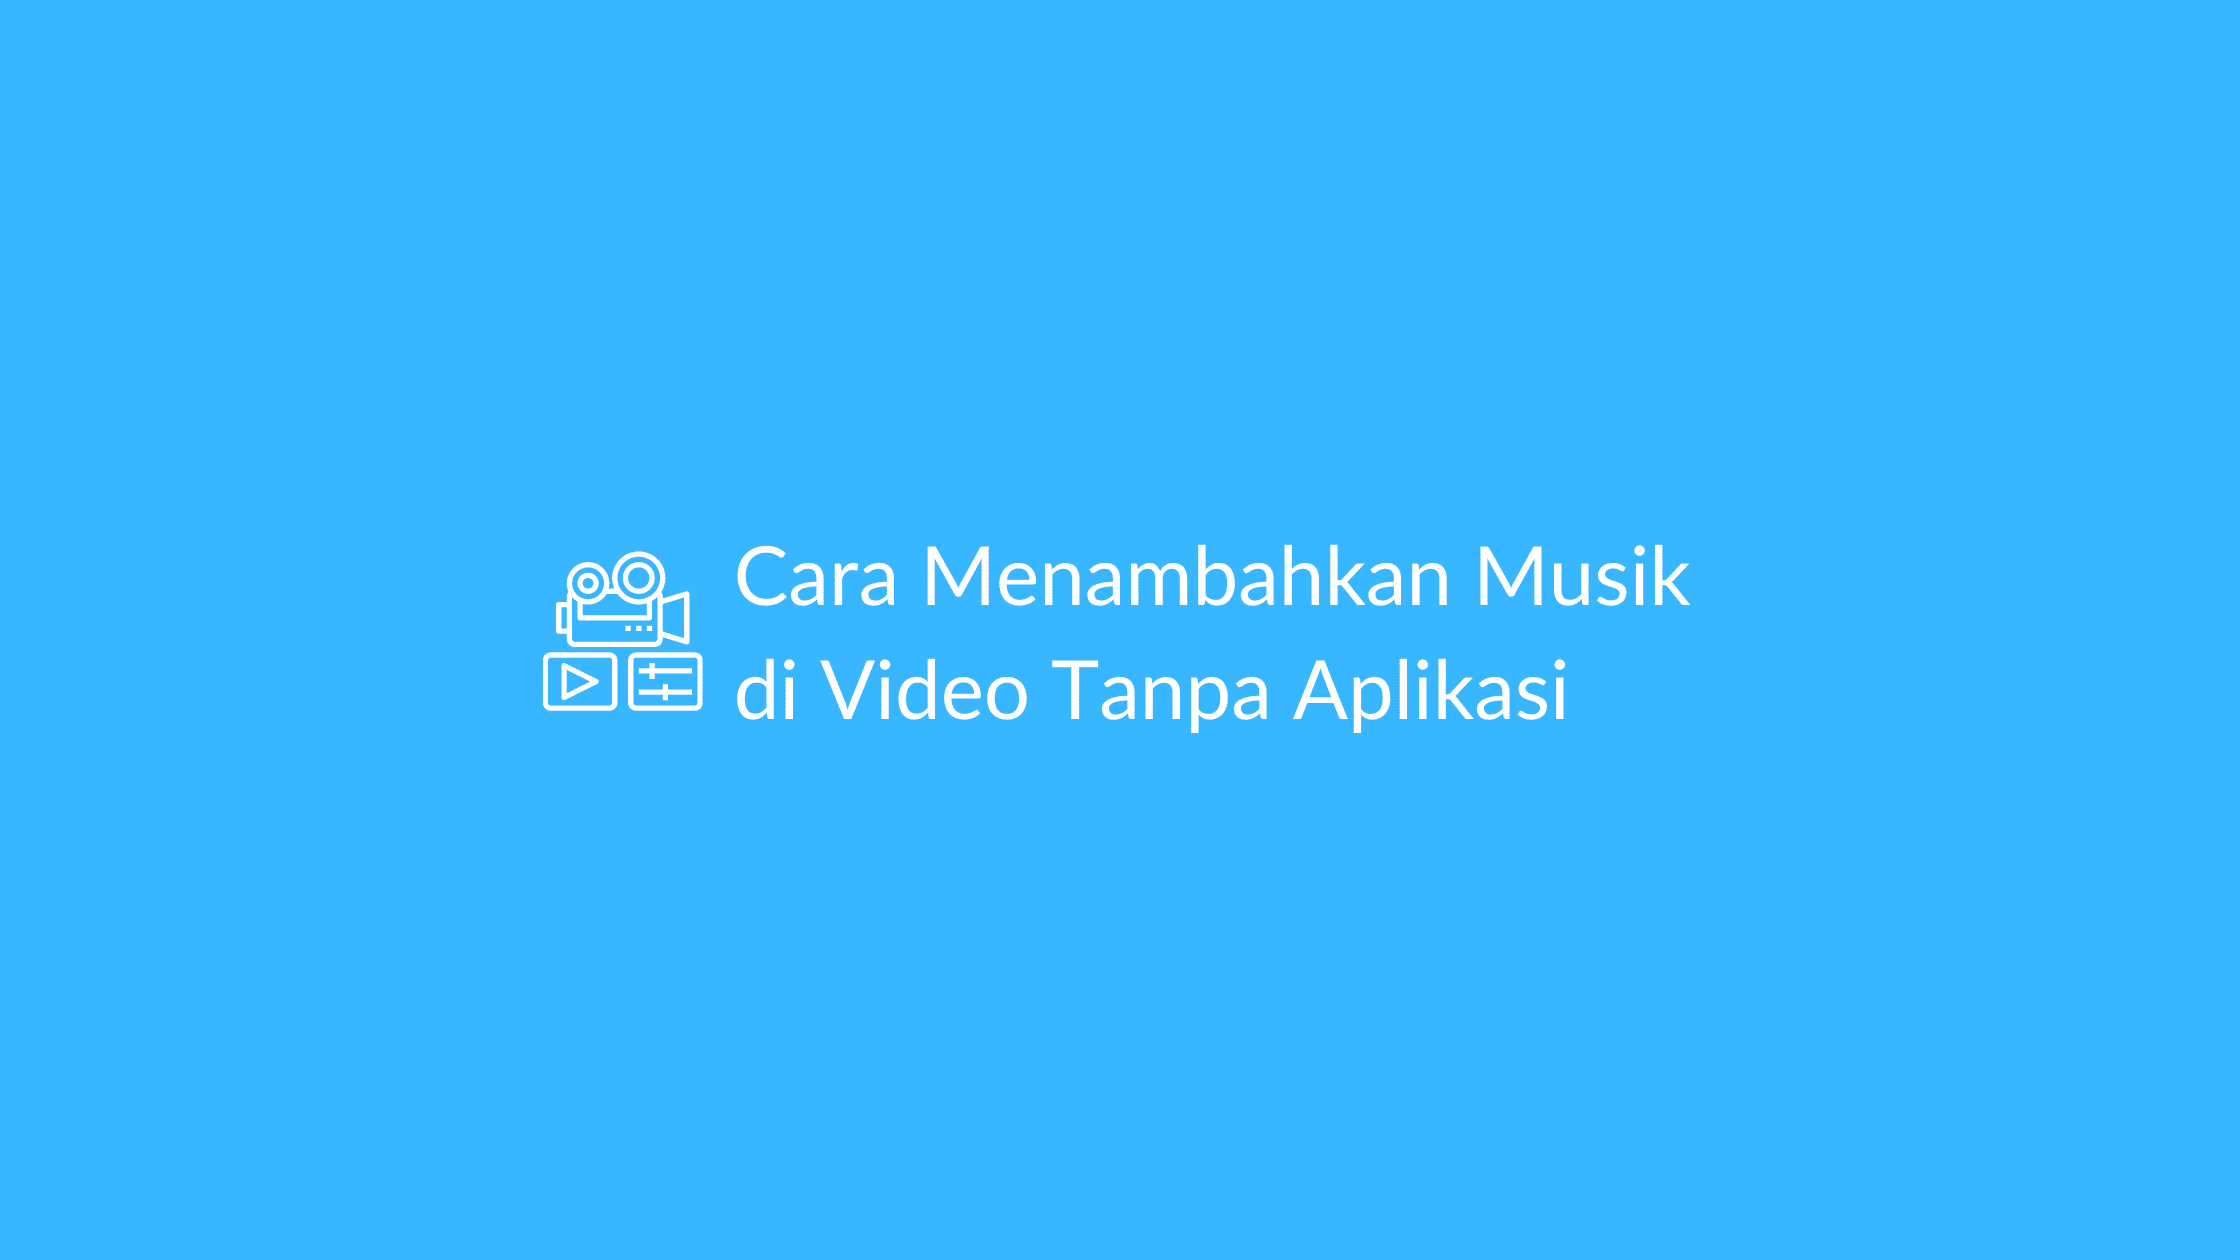 Cara Menambahkan Musik di Video Tanpa Aplikasi